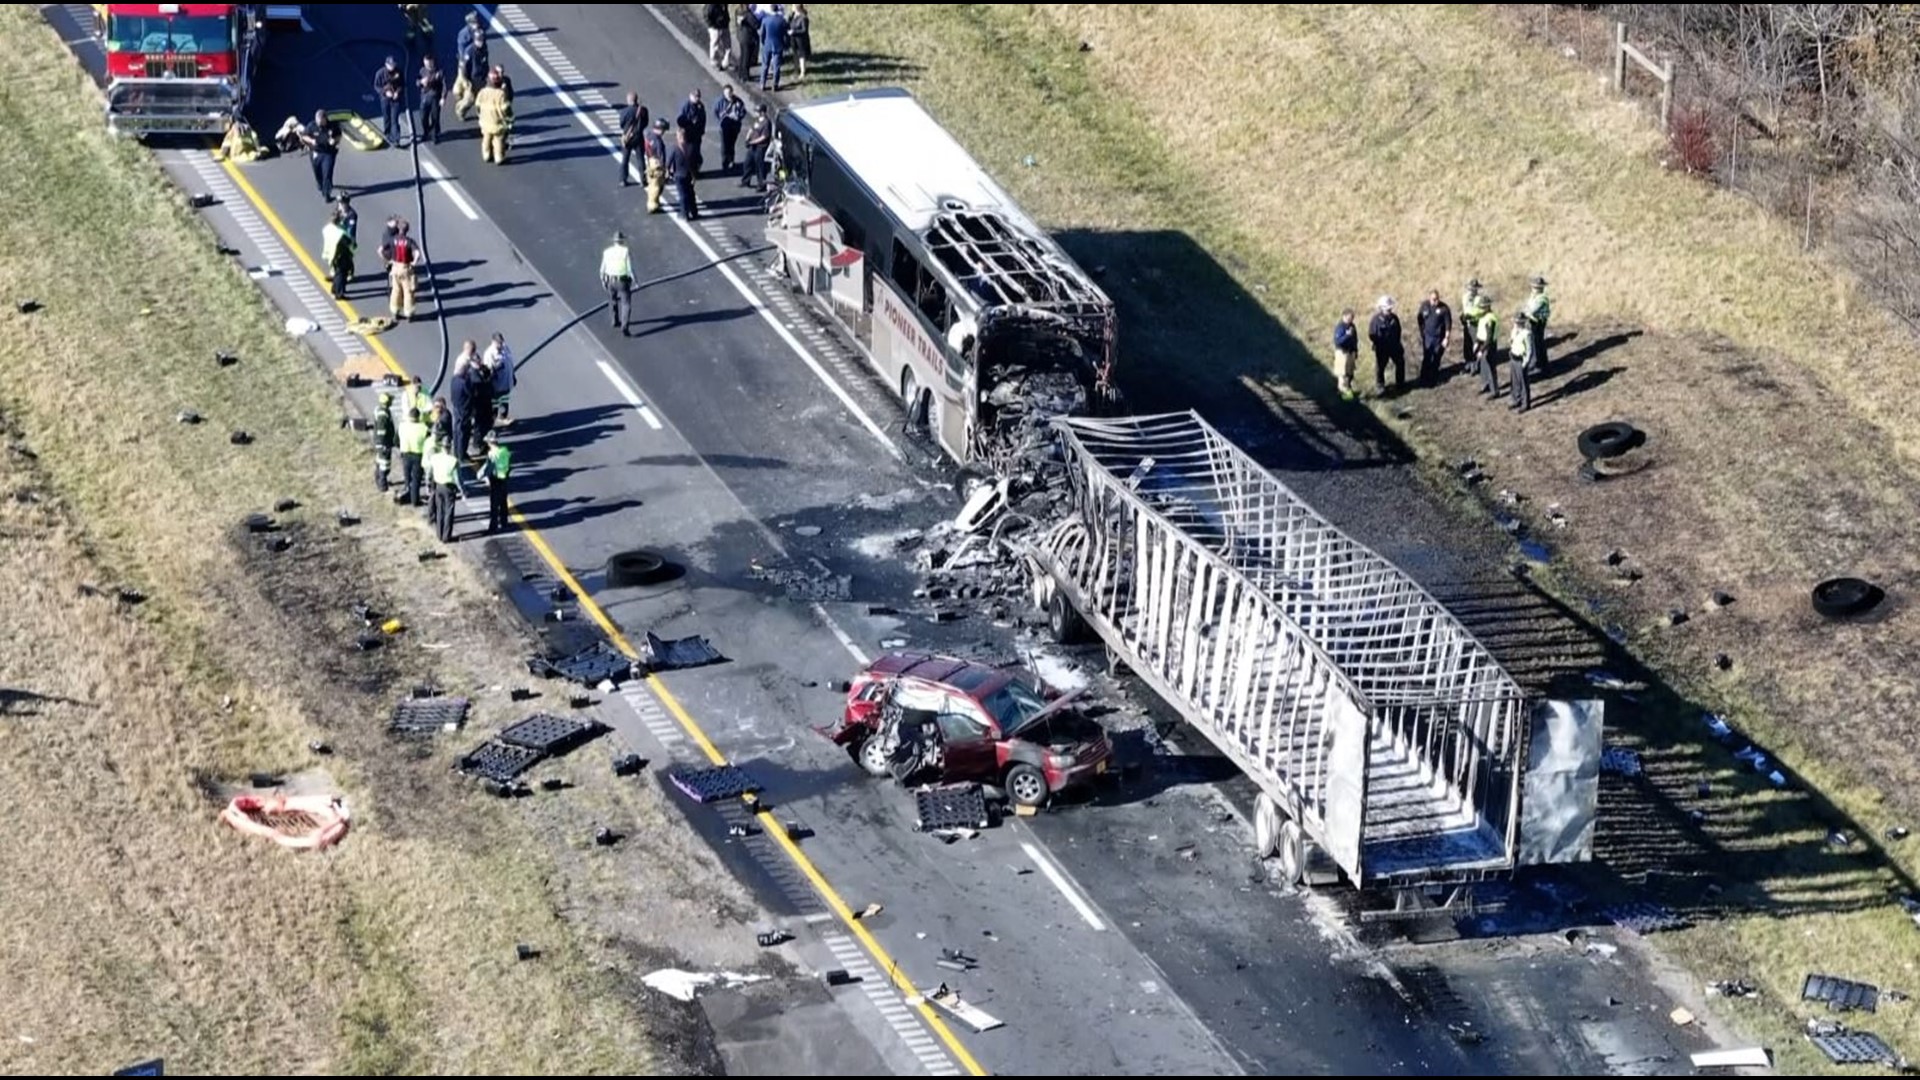 Tusky Valley community grieve over deadly Ohio bus crash